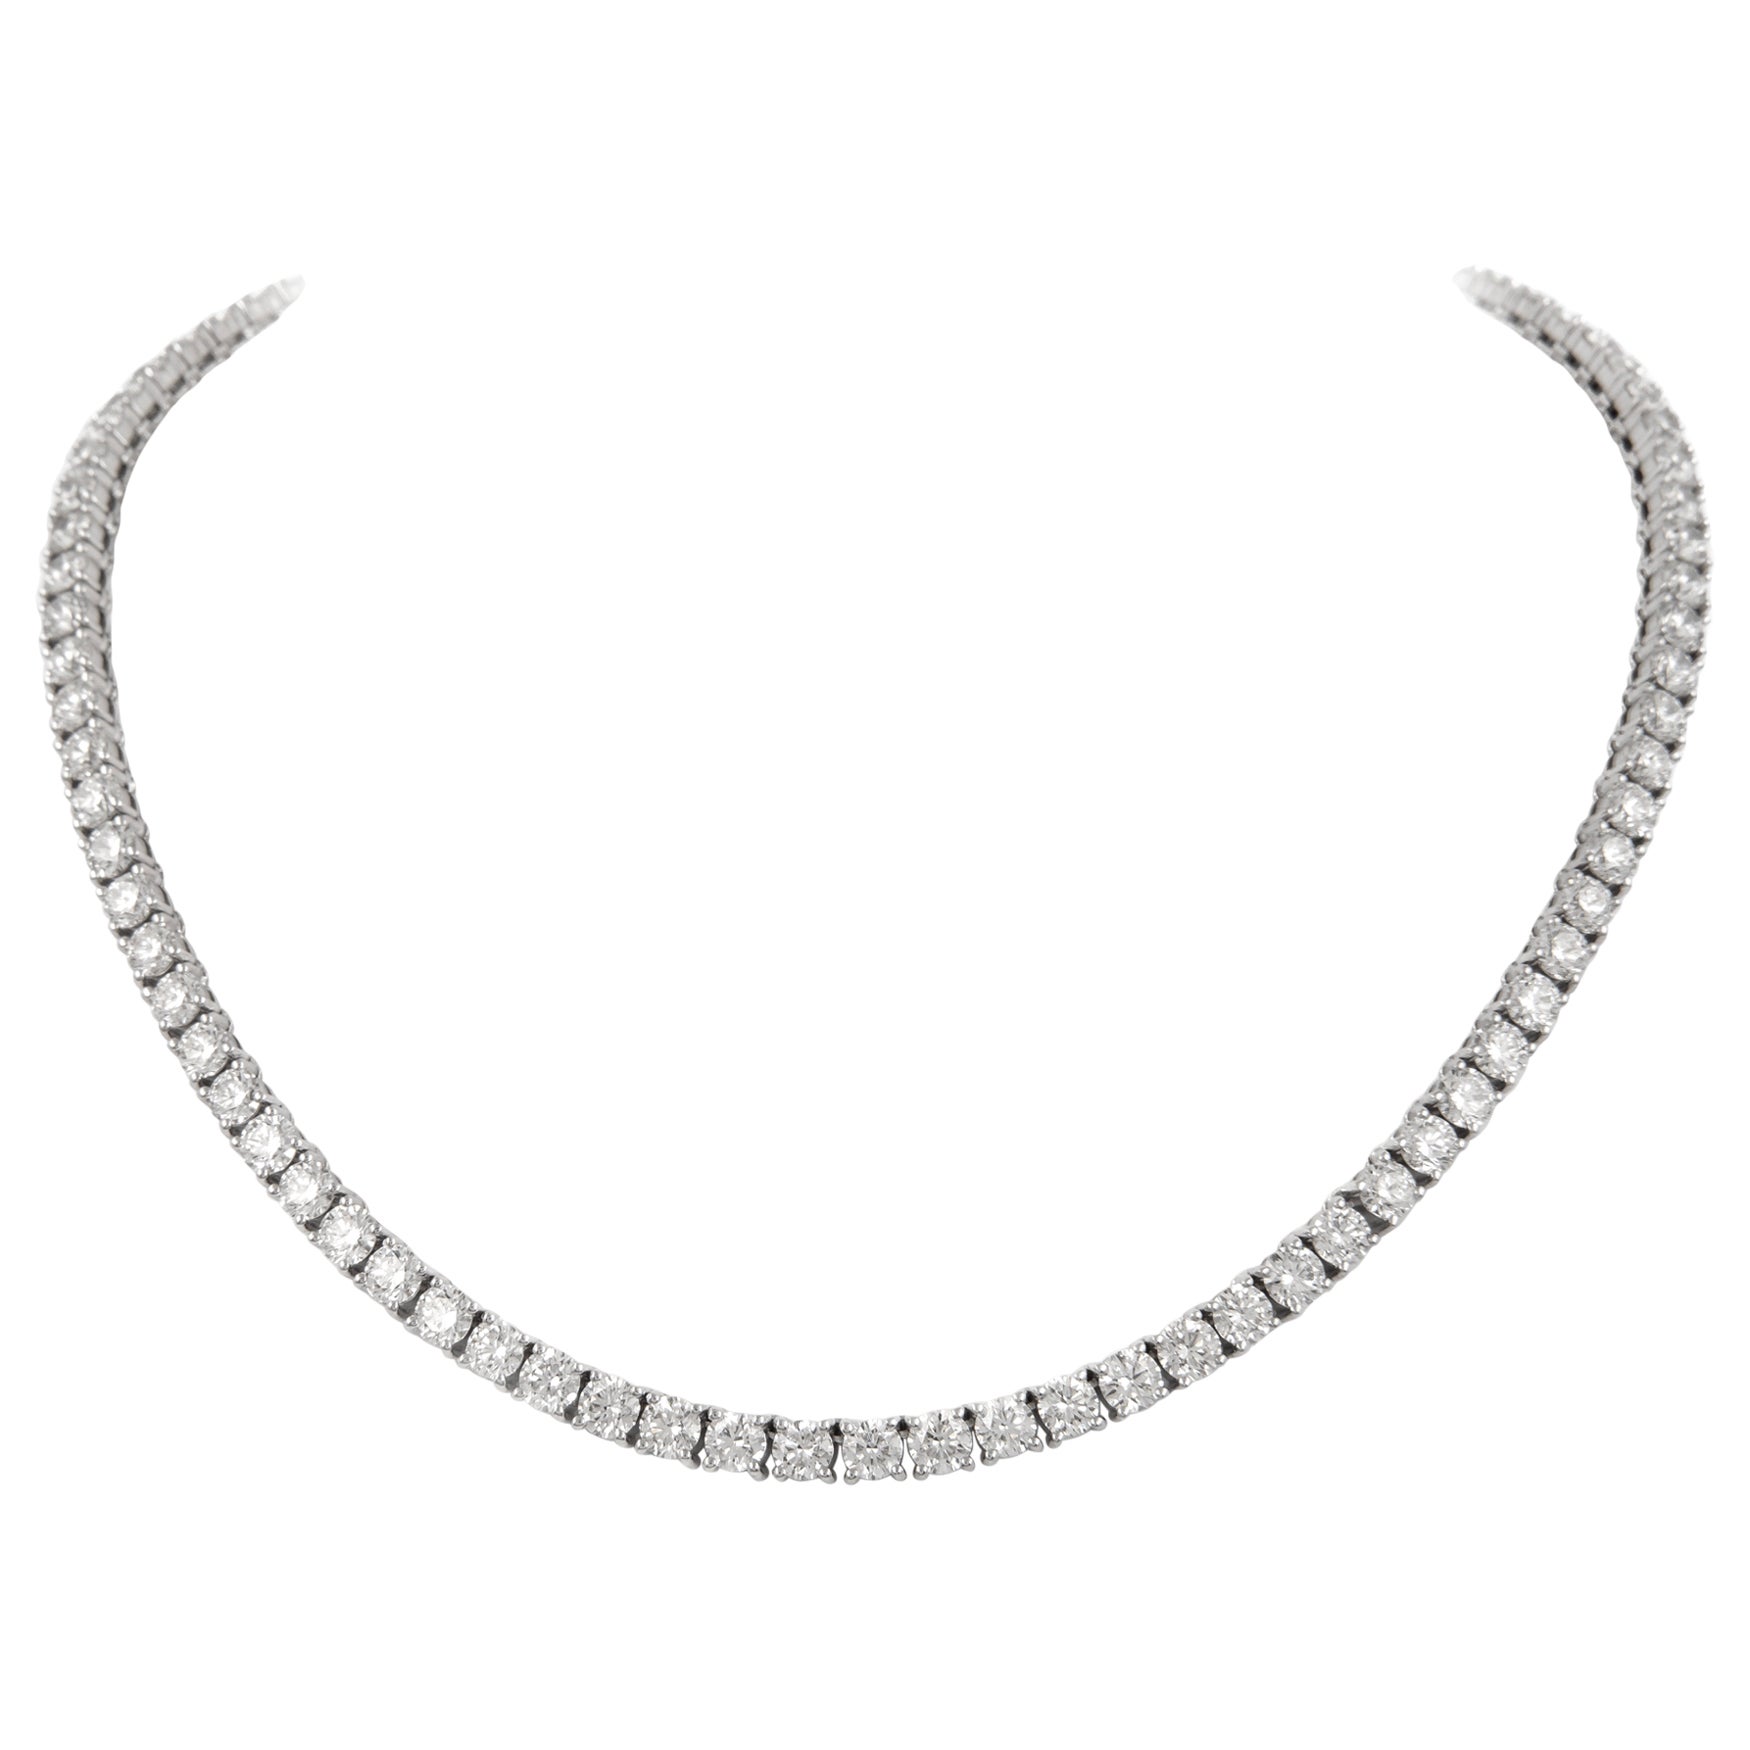 Alexander 27.74 Carat Diamond Tennis Necklace 18k White Gold